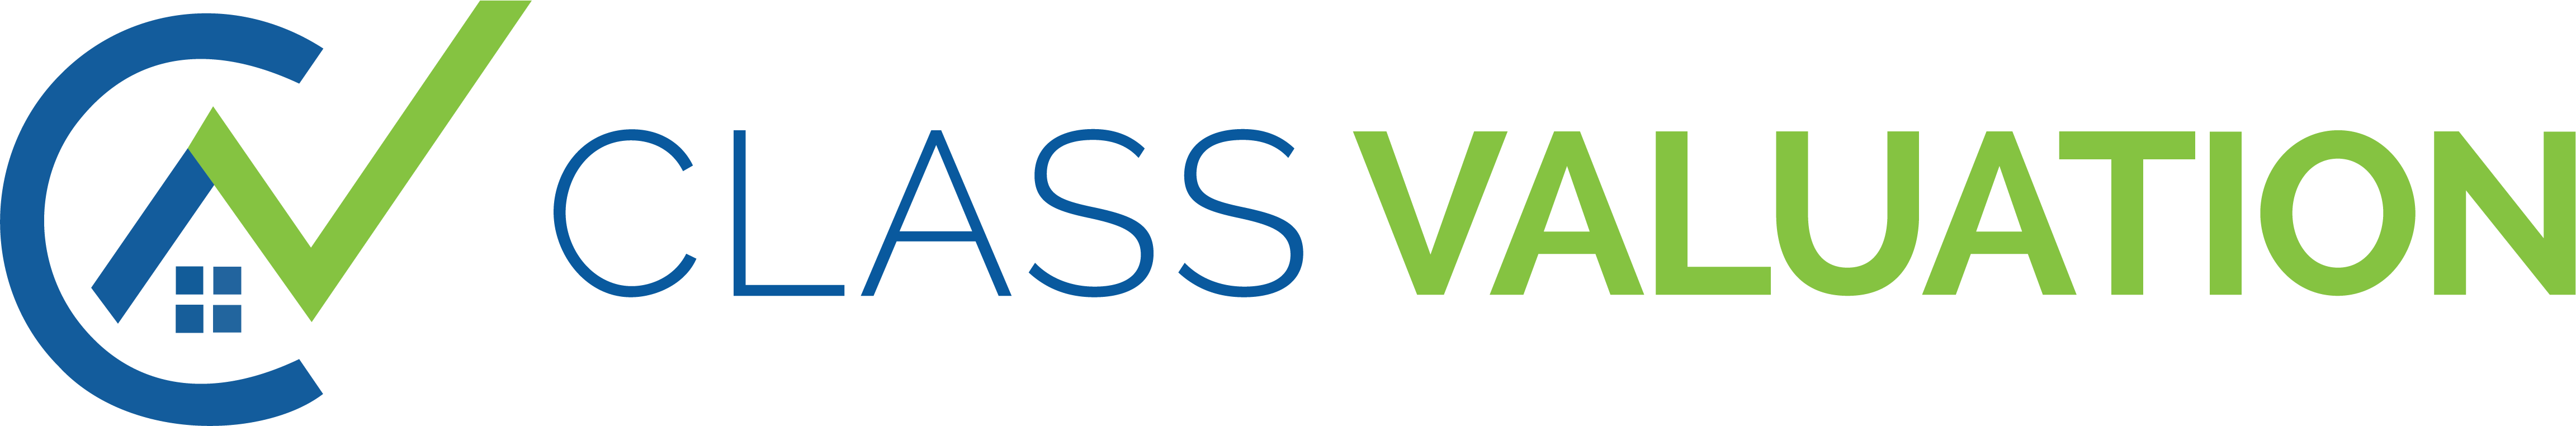 Class Valuation logo